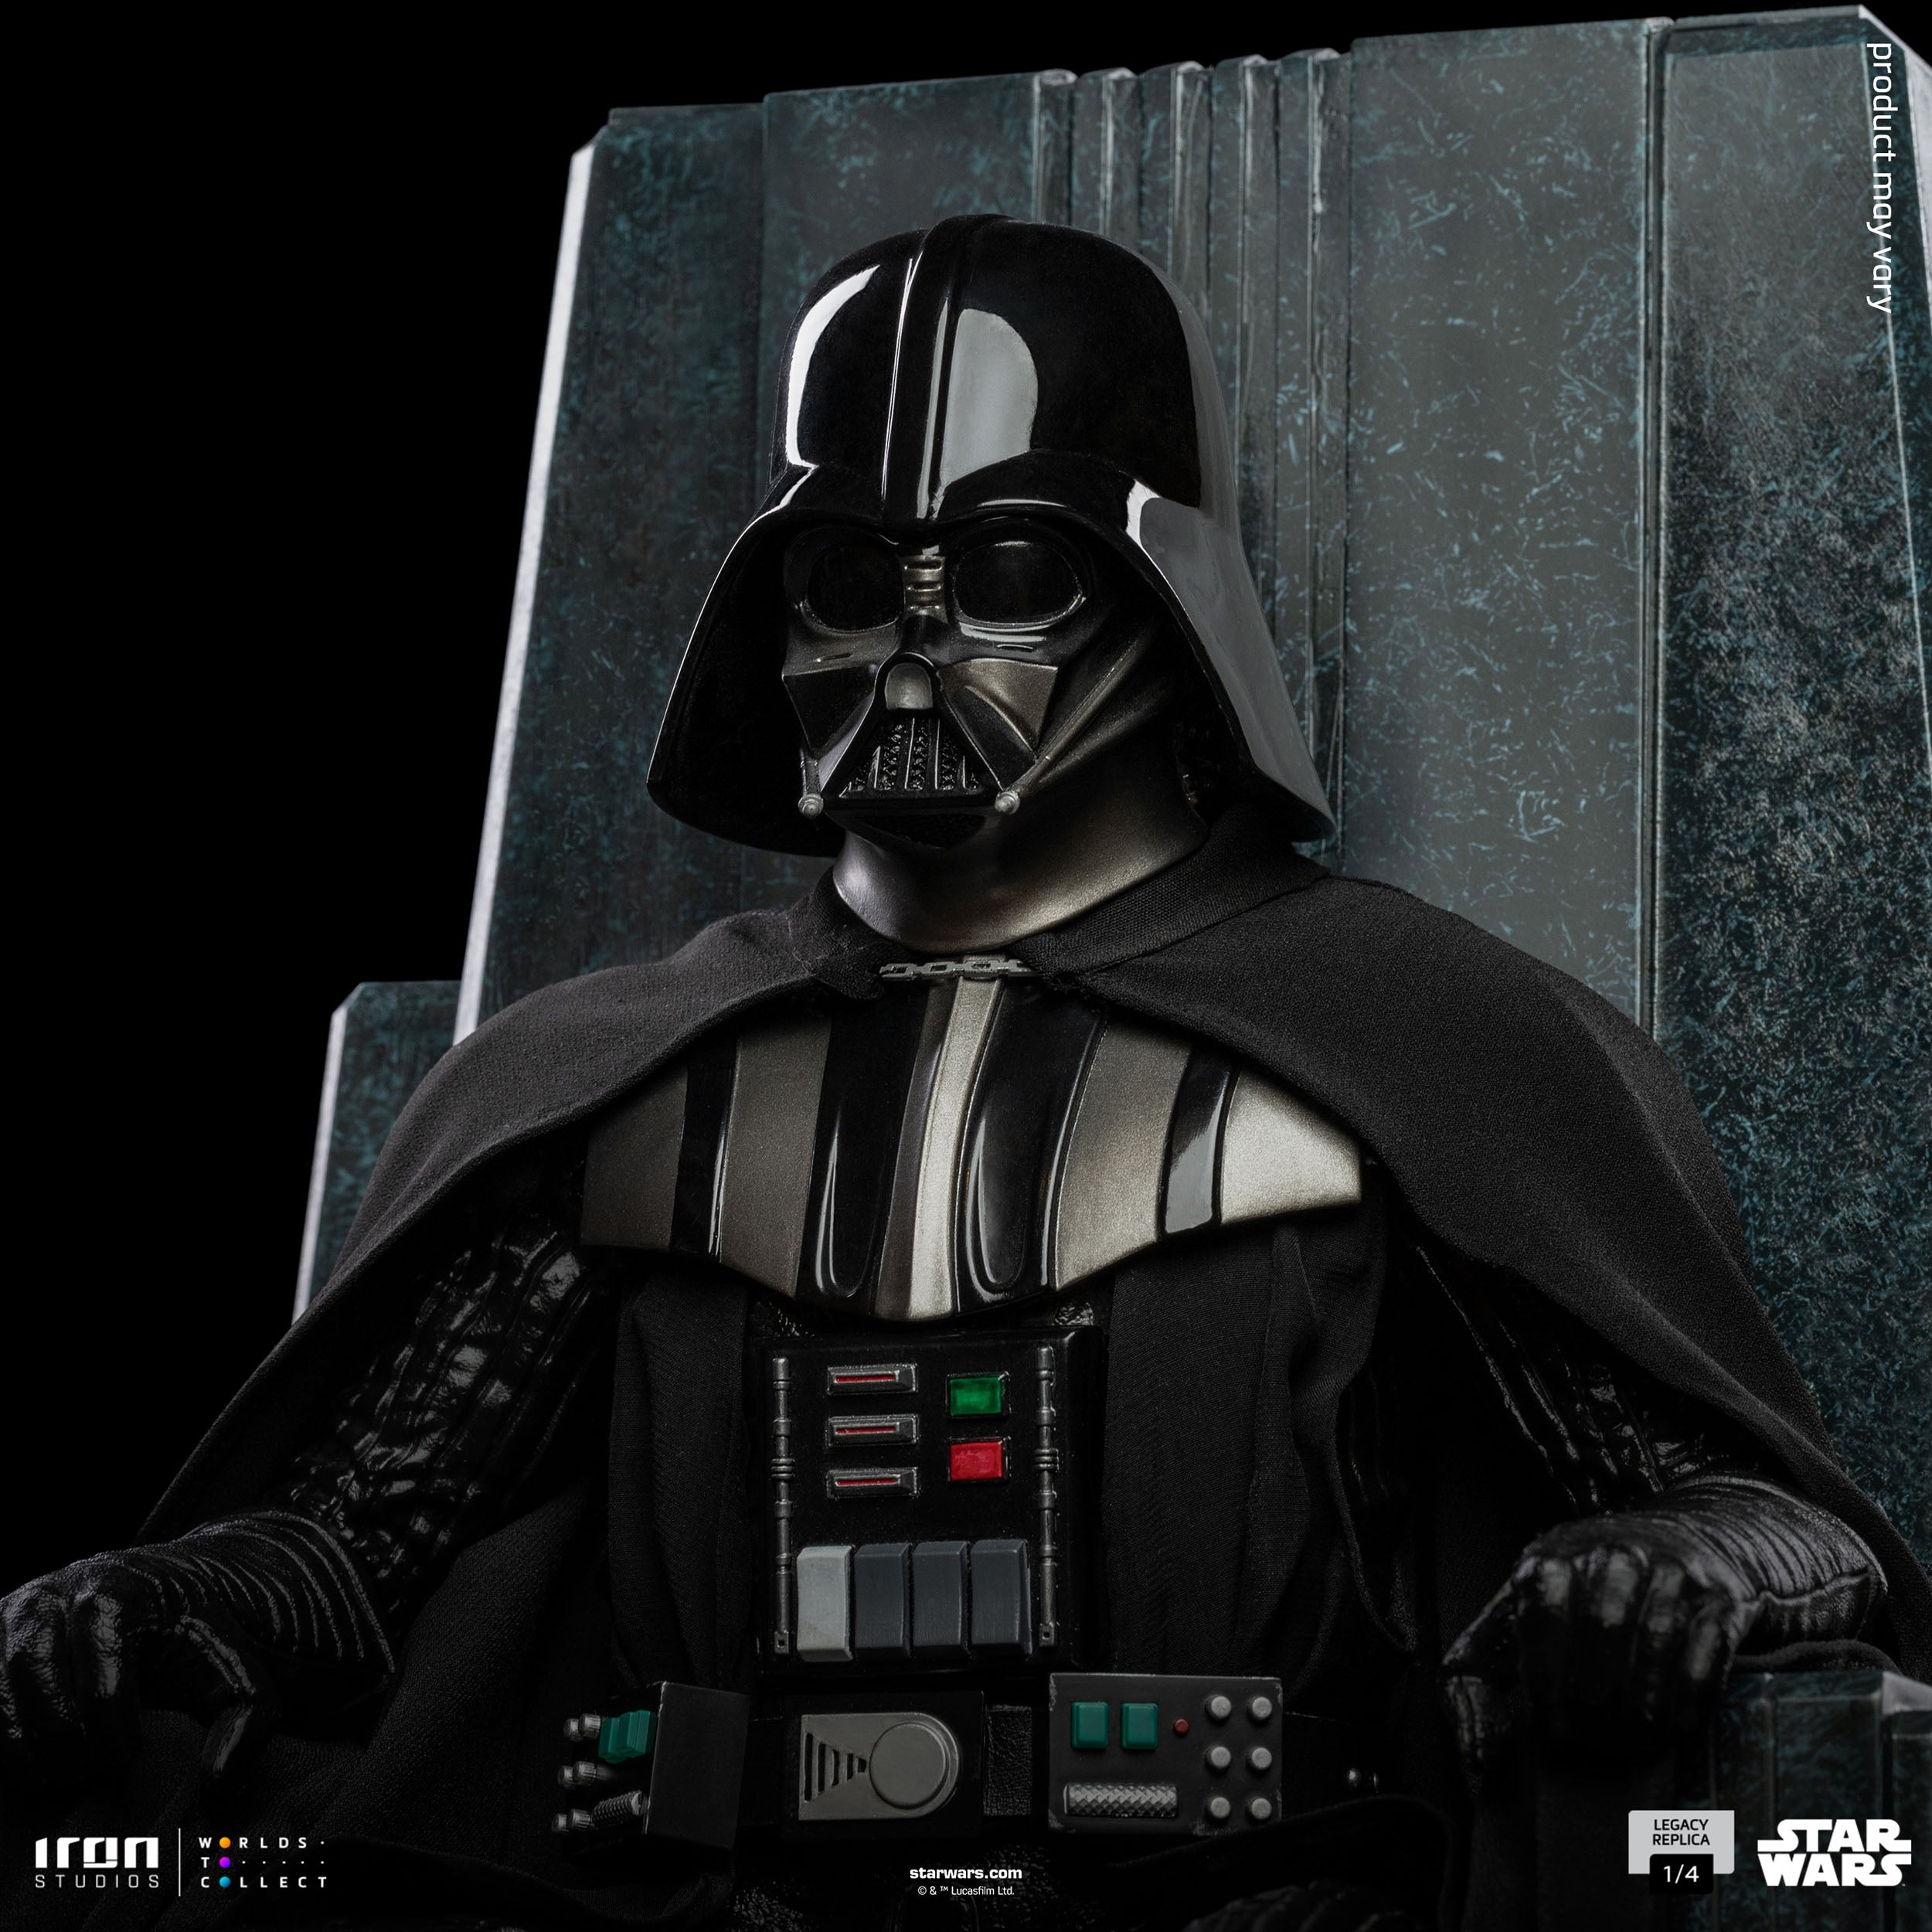 Star Wars - Darth Vader on Throne.